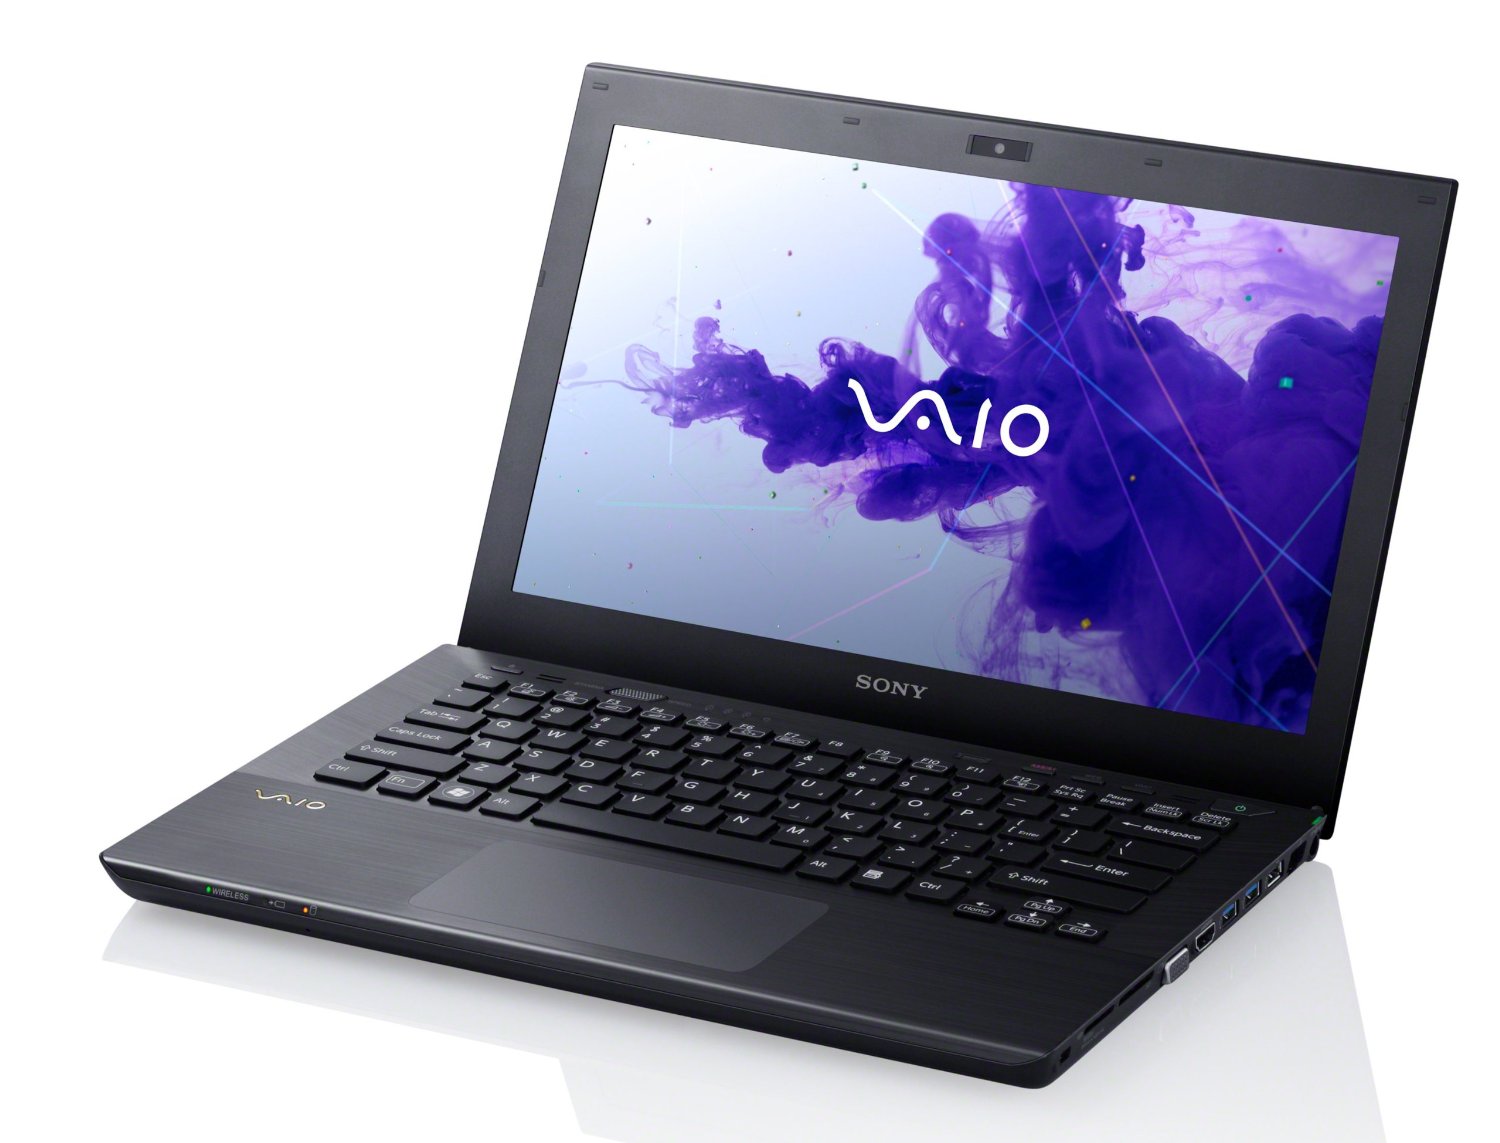 Sony Vaio SV-S Series - Notebookcheck.net External Reviews